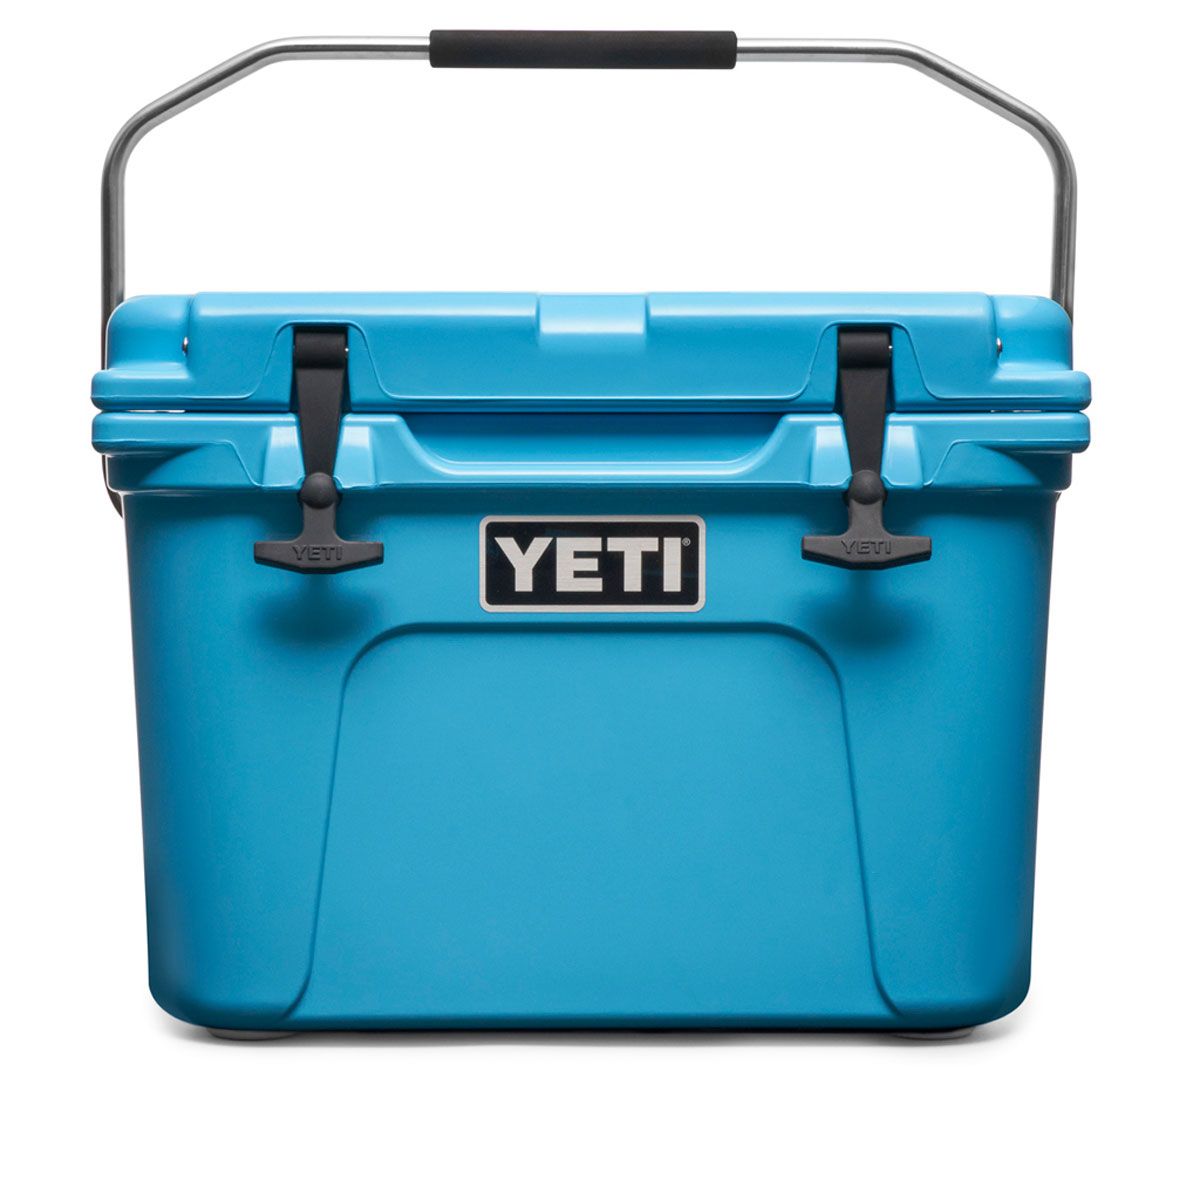 Yeti Coolers Roadie 20 Cooler Limited Edition Reef Blue AustinKayak